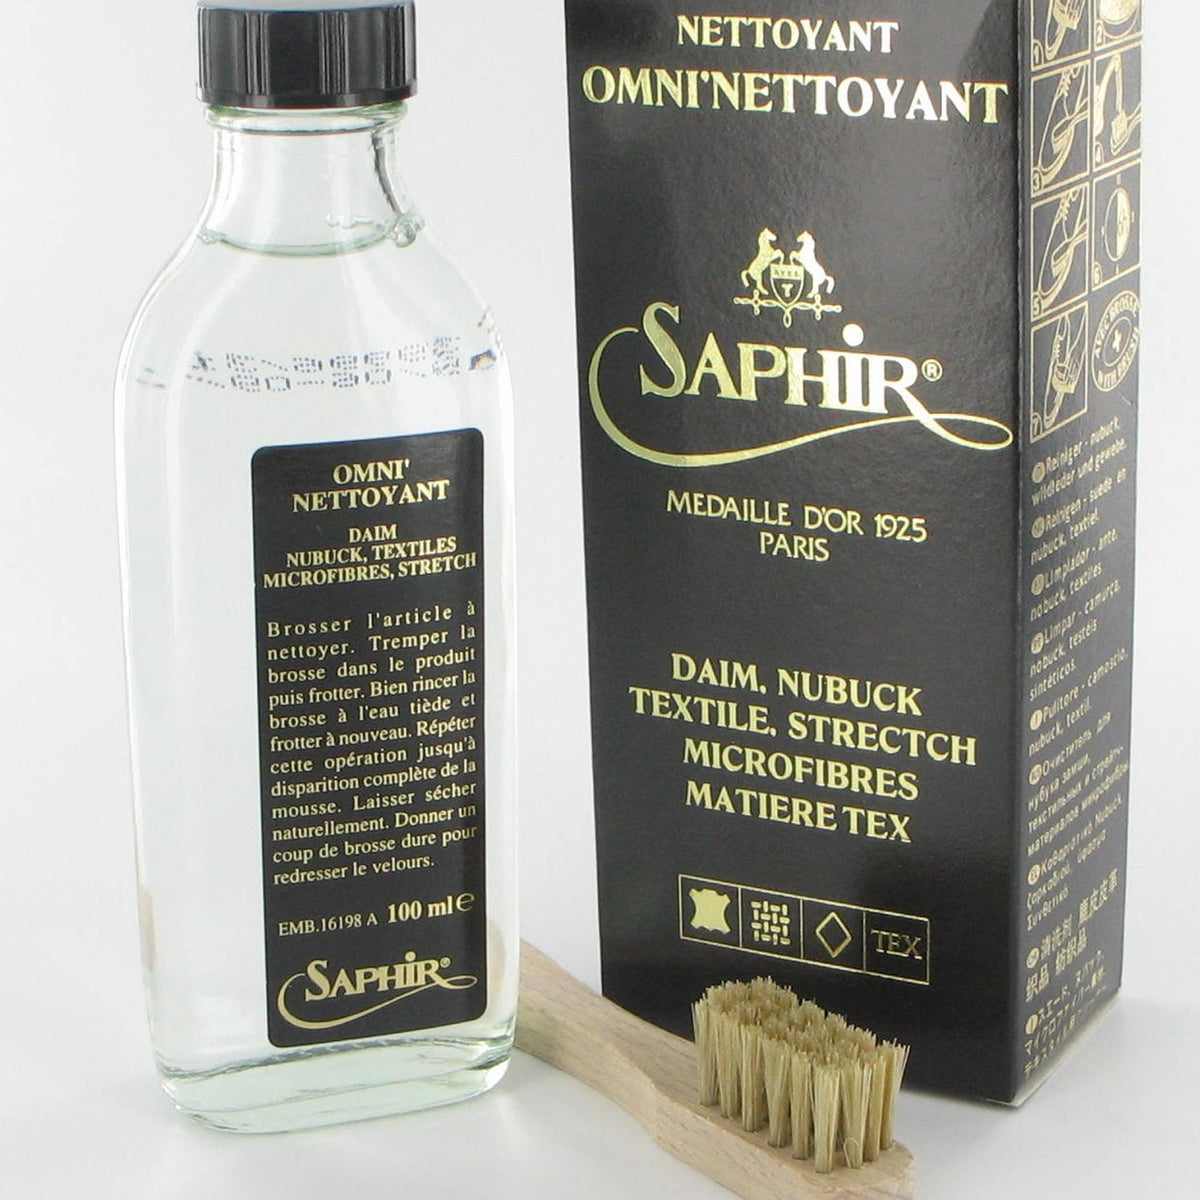 Saphir Omni'Nettoyant Suede Shampoo : Suede Cleaner